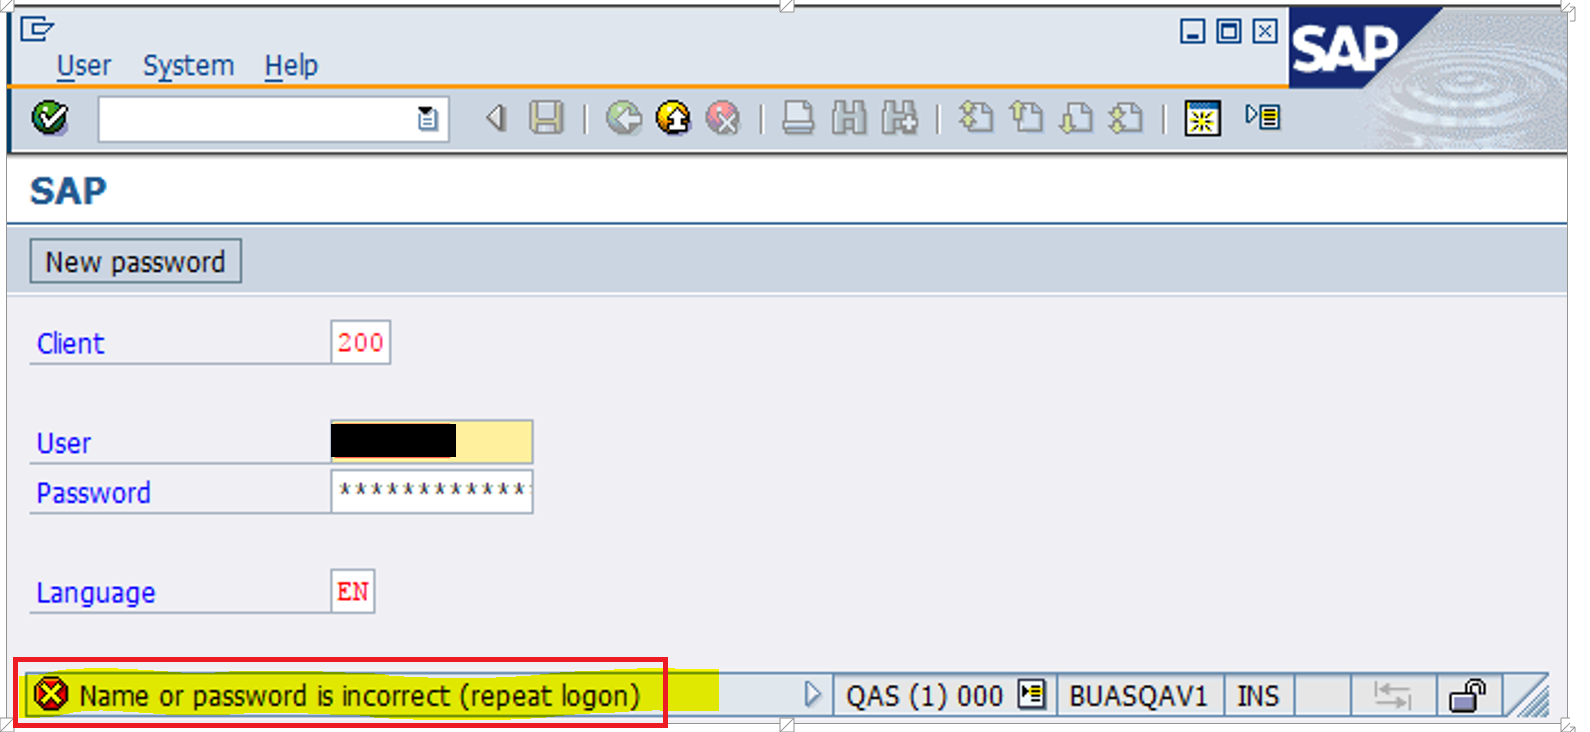 SAP login - Incorrect password